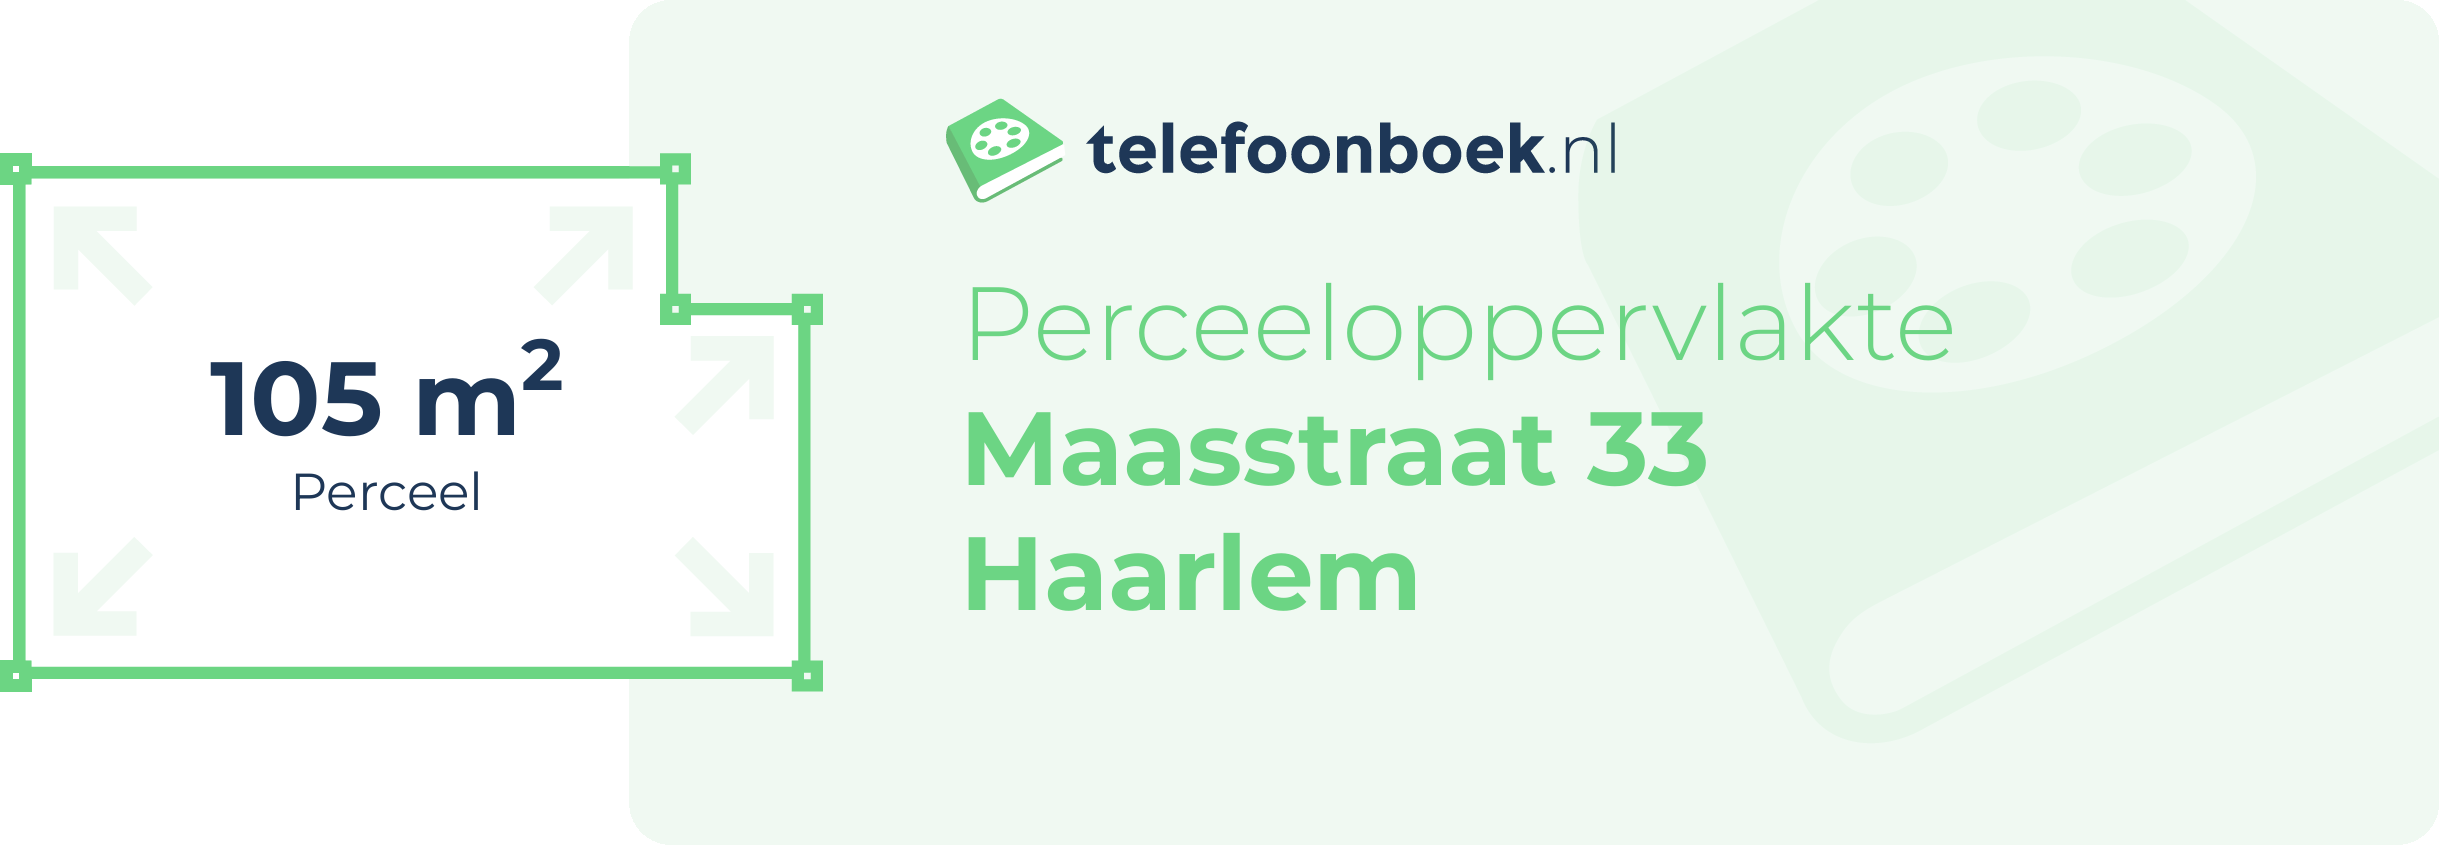 Perceeloppervlakte Maasstraat 33 Haarlem